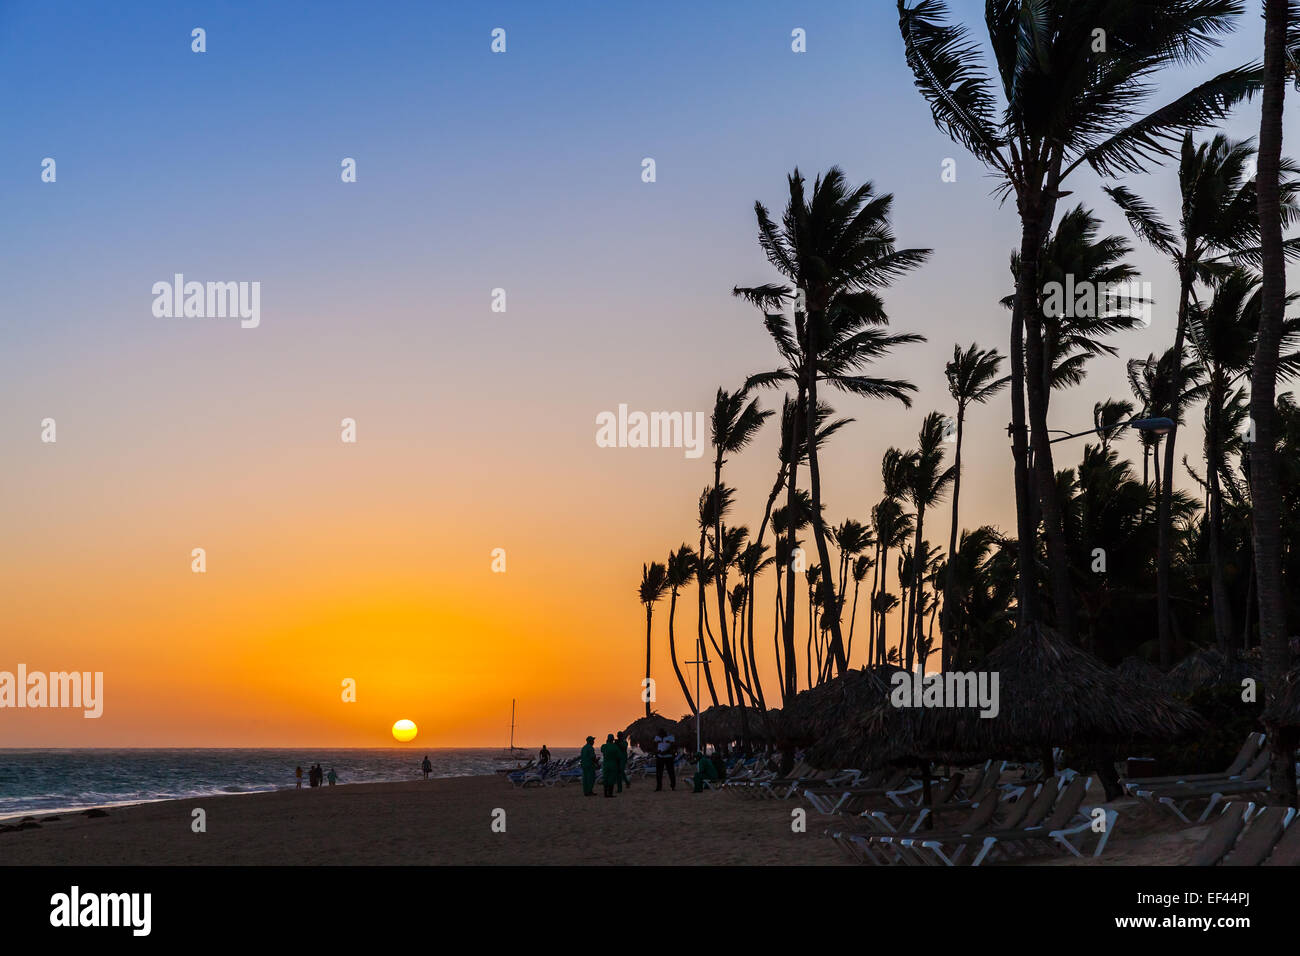 Sunrise landscape on Atlantic ocean coast with palm trees. Dominican republic Stock Photo